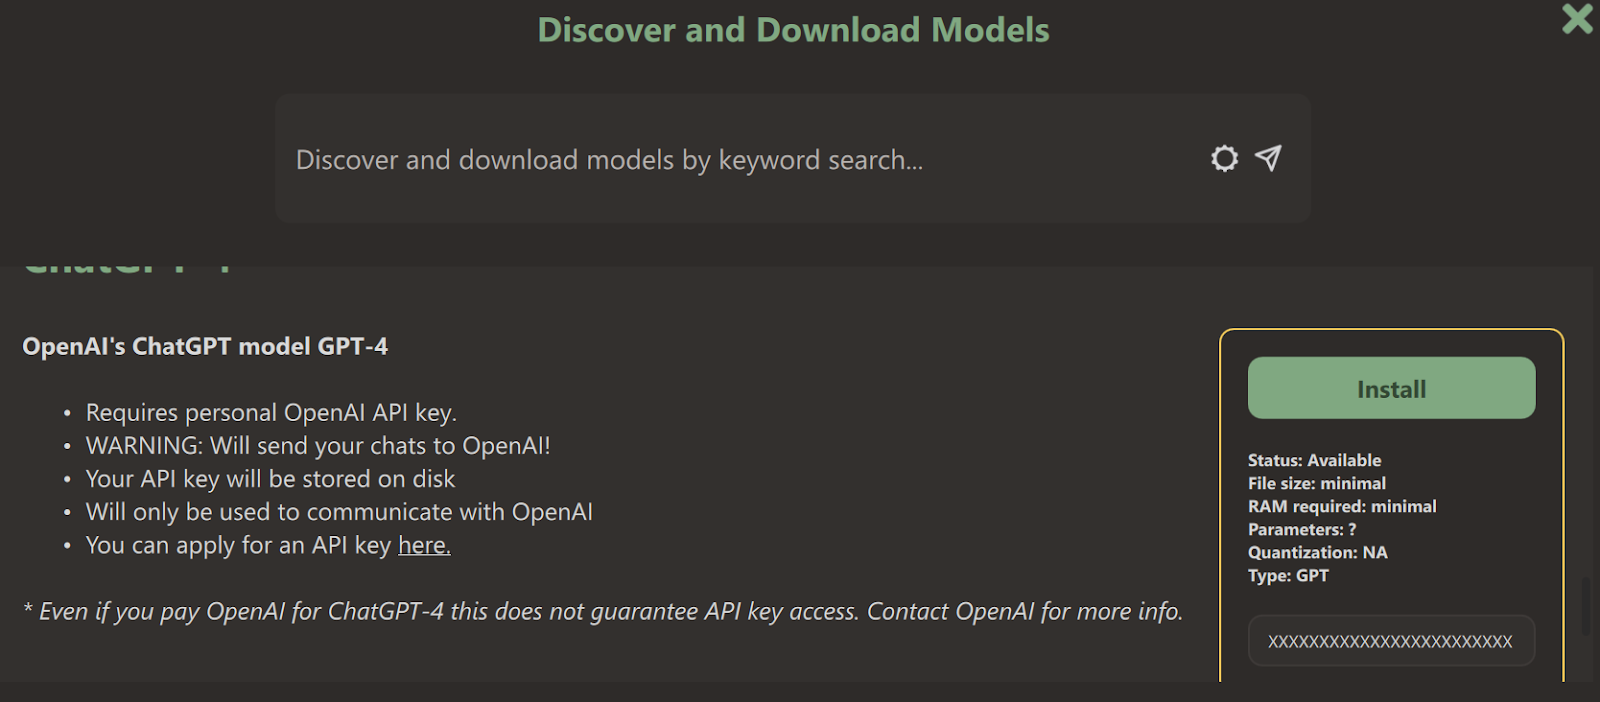 Setting up OpenAI API key for accessing the GPT-4 model